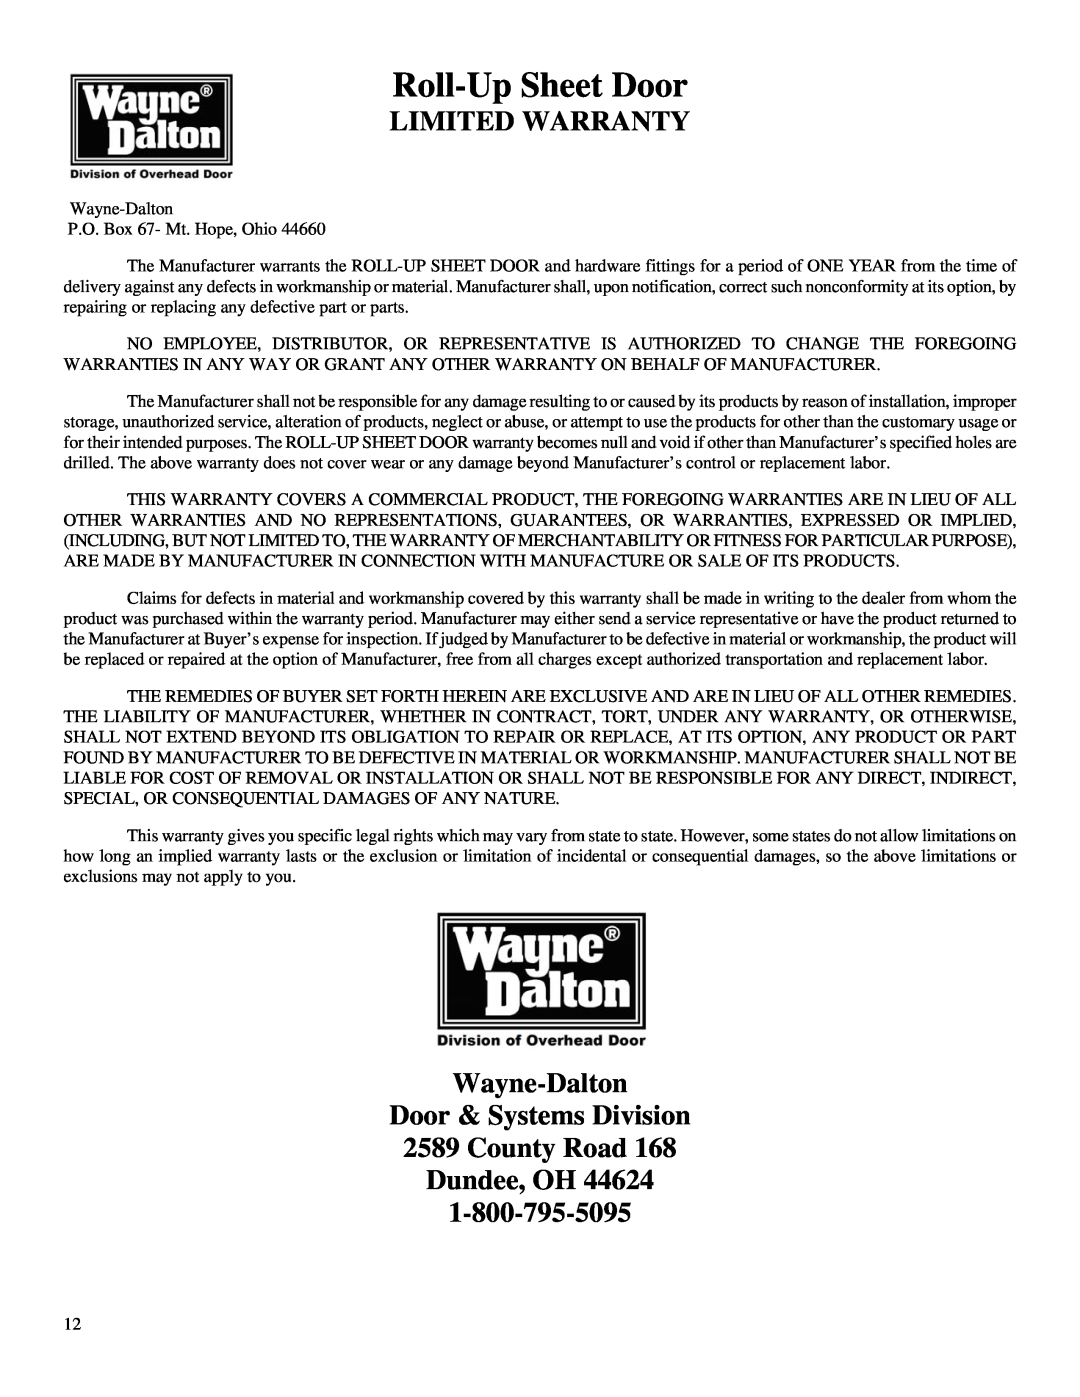 Wayne-Dalton DS-75, DS-50, DS-100 Roll-UpSheet Door, Limited Warranty, Wayne-Dalton Door & Systems Division 